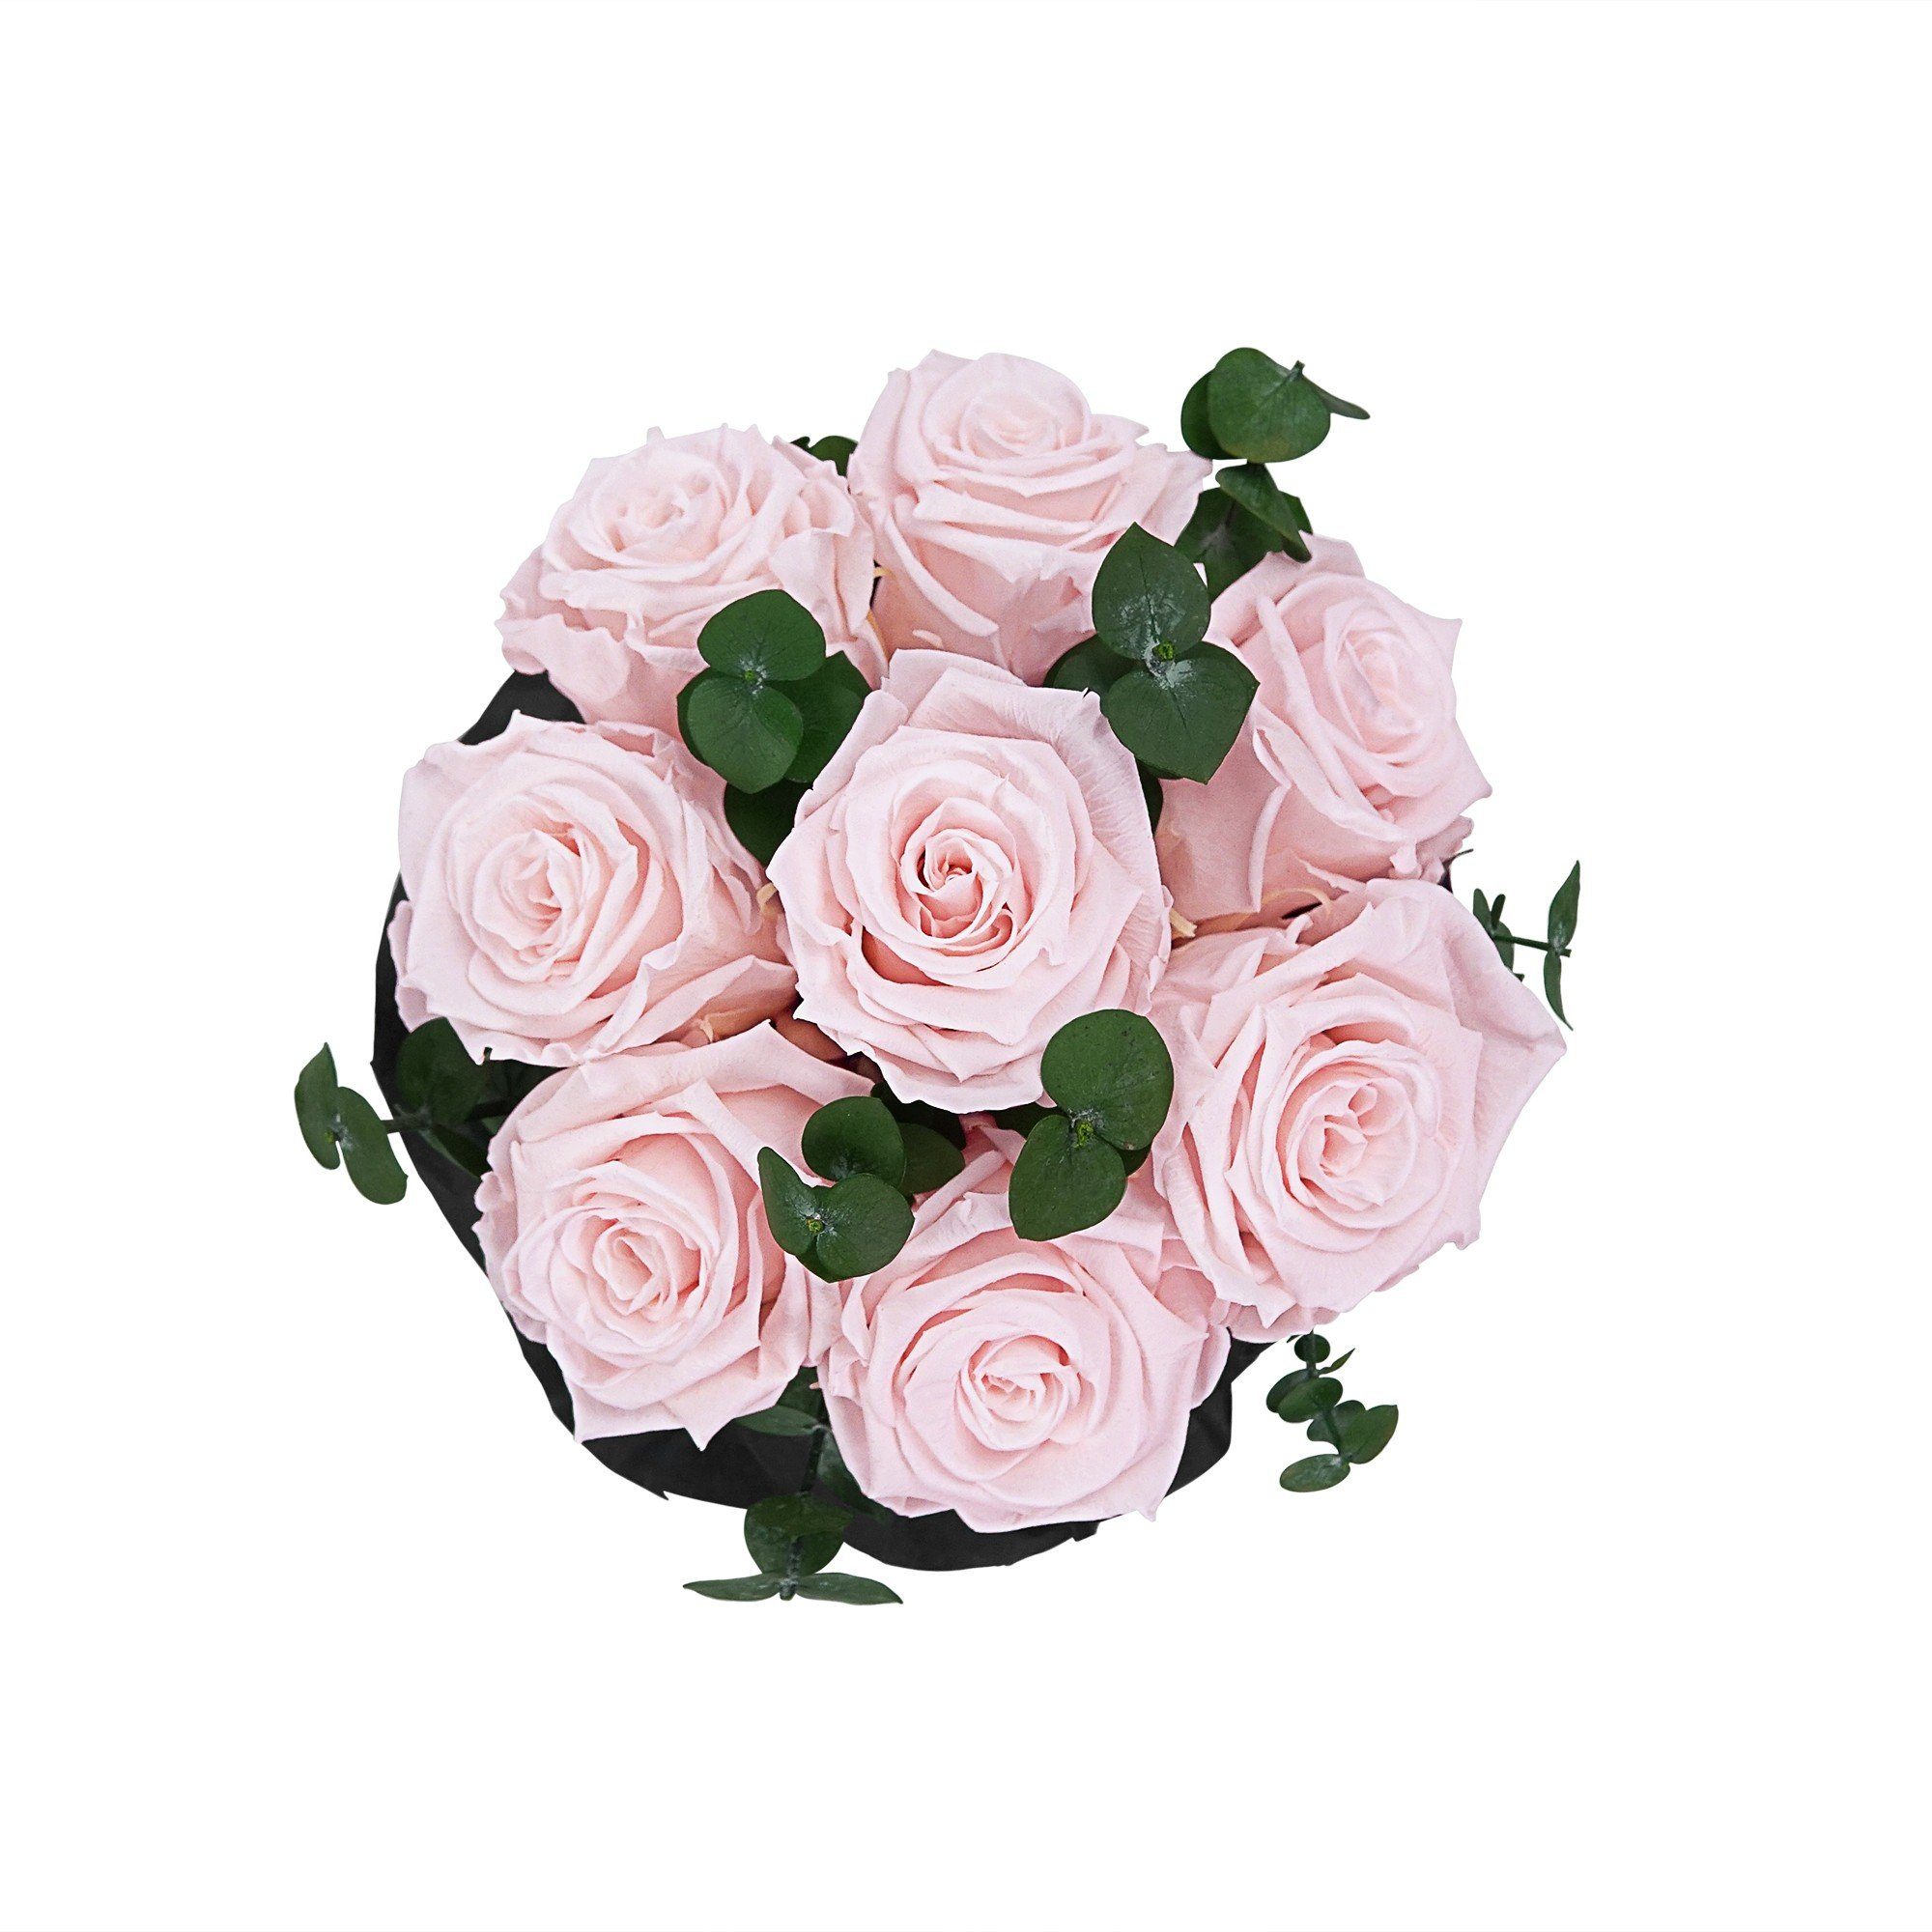 3 mit I Raul konservierte I Jahre Holy Kunstblume Rose, Bouquet Blumen 7-9 Echte, by Infinity Flowers Richter duftende Rosenbox Hellrosa I Rosen haltbar